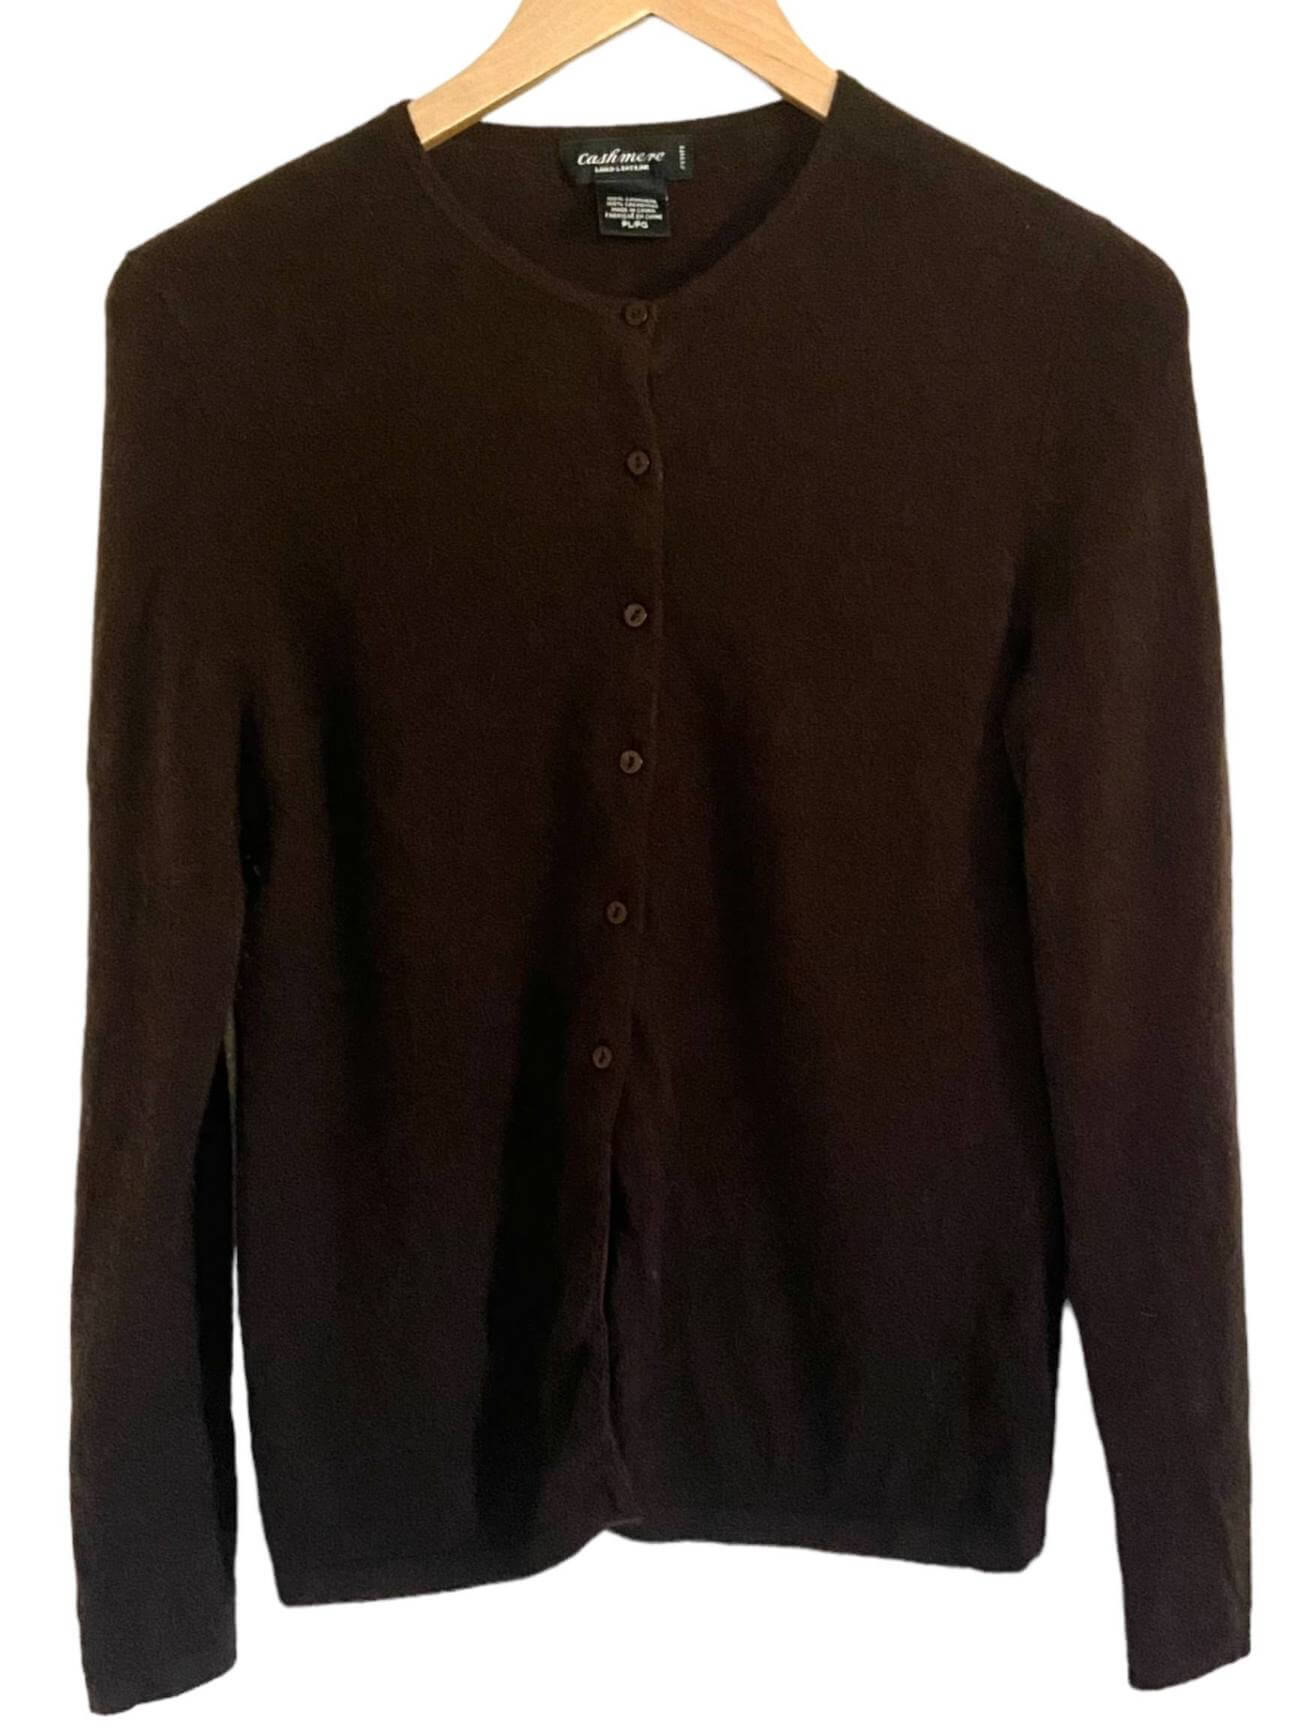 Dark Autumn LORD & TAYLOR clove brown cashmere cardigan sweater